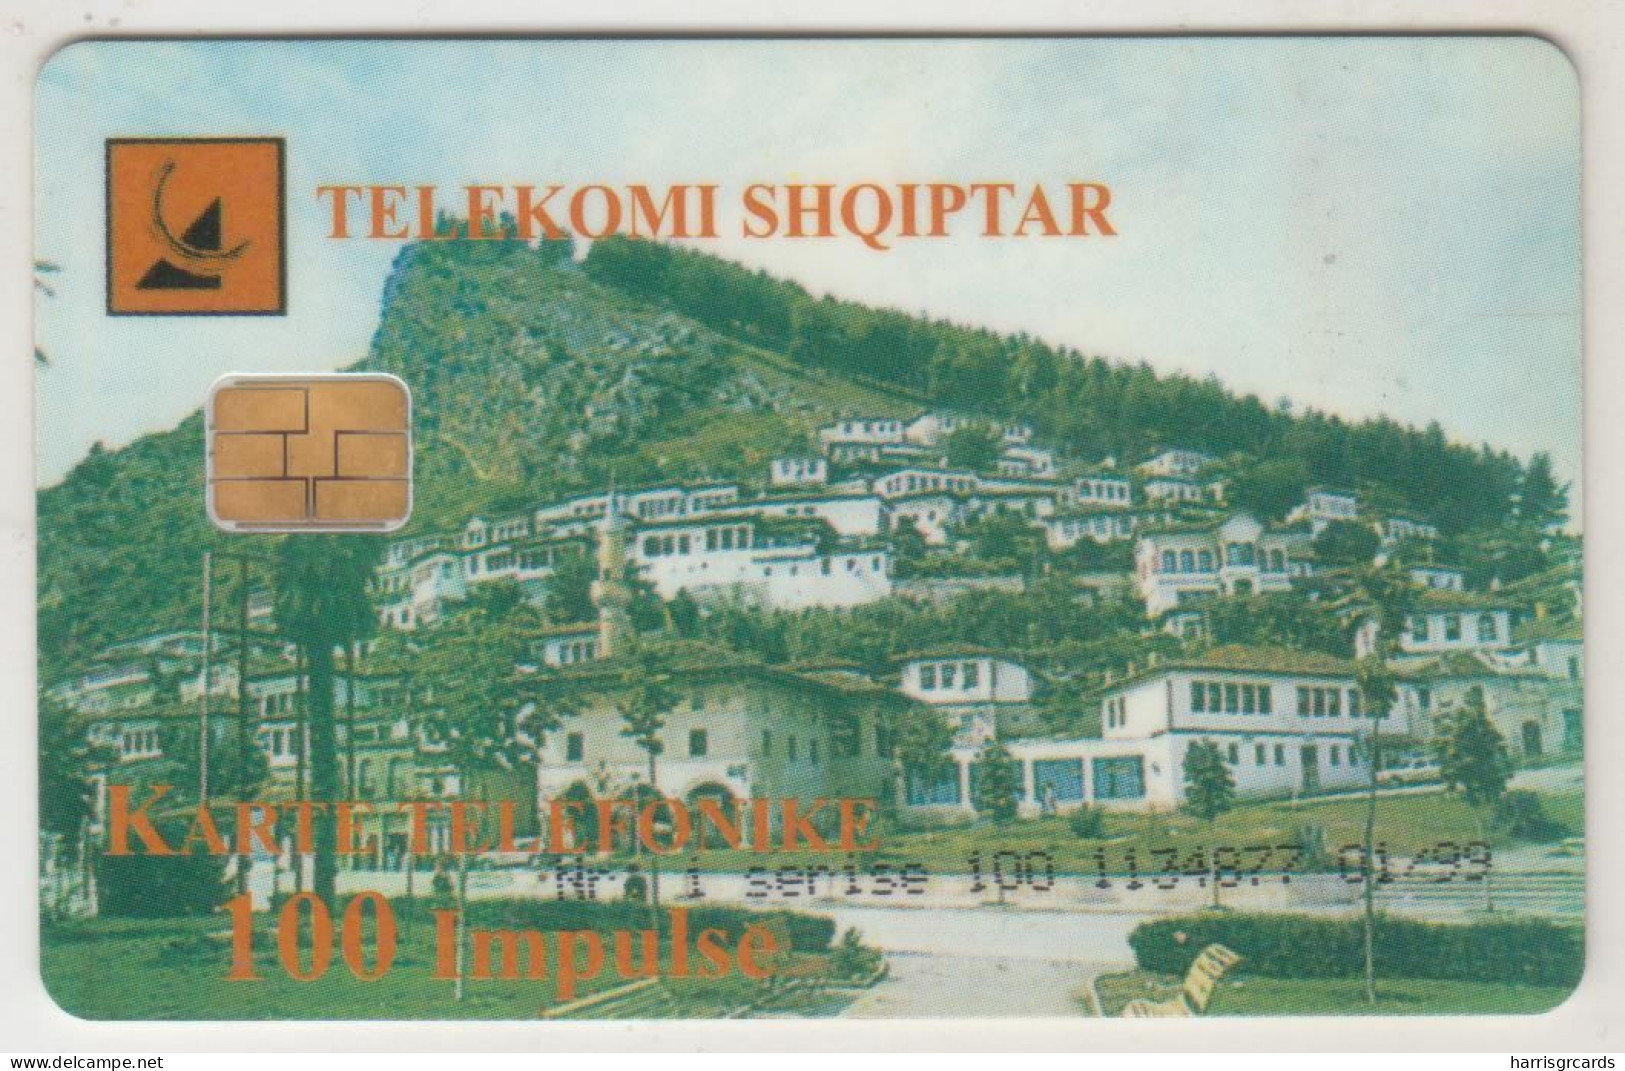 ALBANIA - Berat Unesco Traditional Heritage Town ,CN: Black, 01/99, Tirage 90.000, 100 U, Used - Albanien